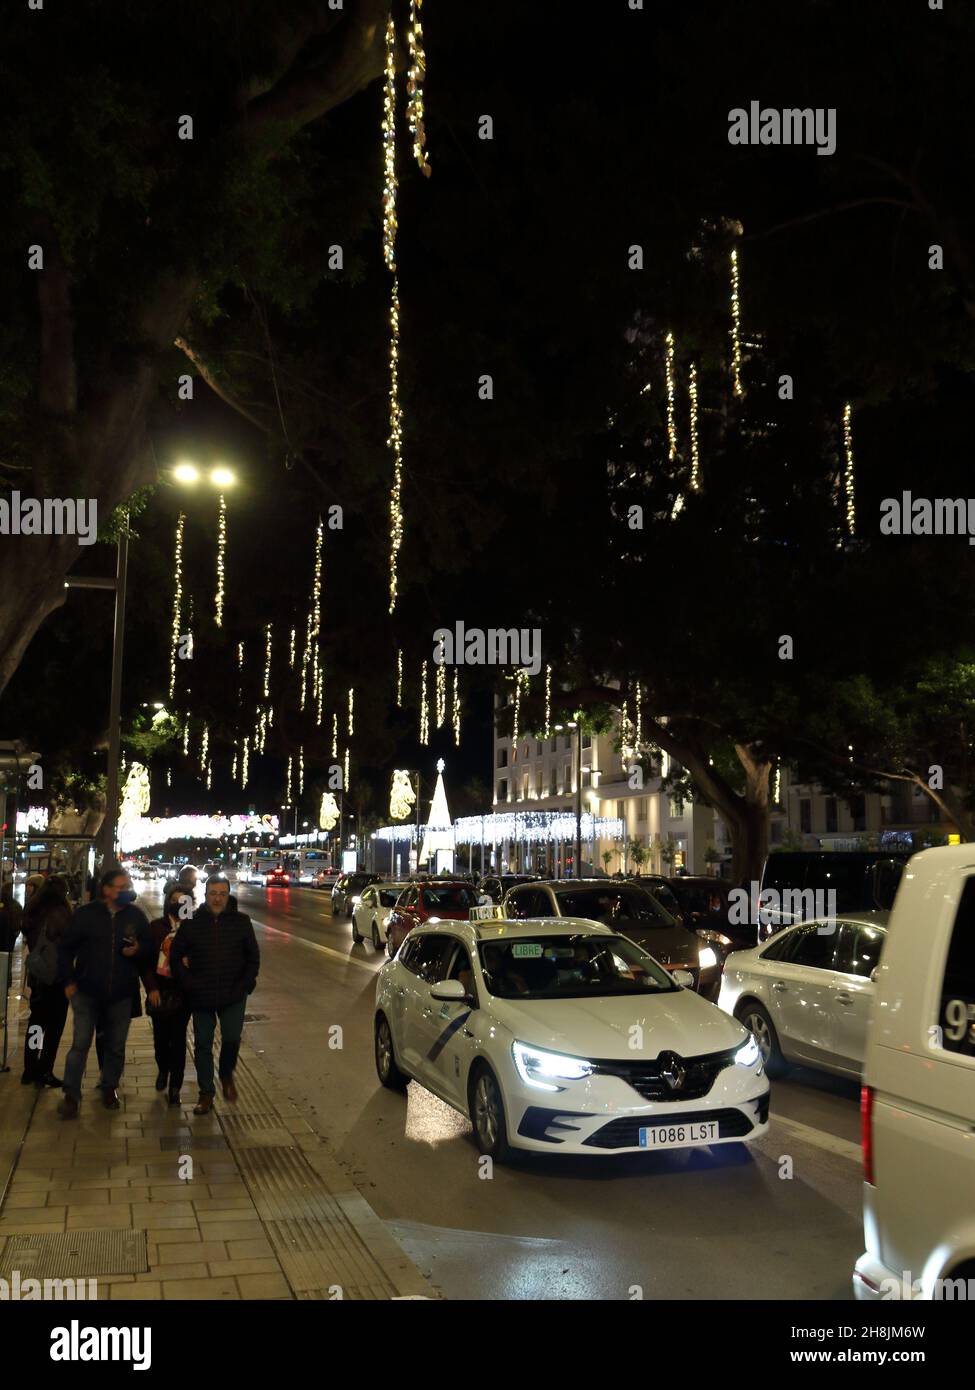 Christmas Lights at Alameda Principal of Malaga, Spain. Stock Photo